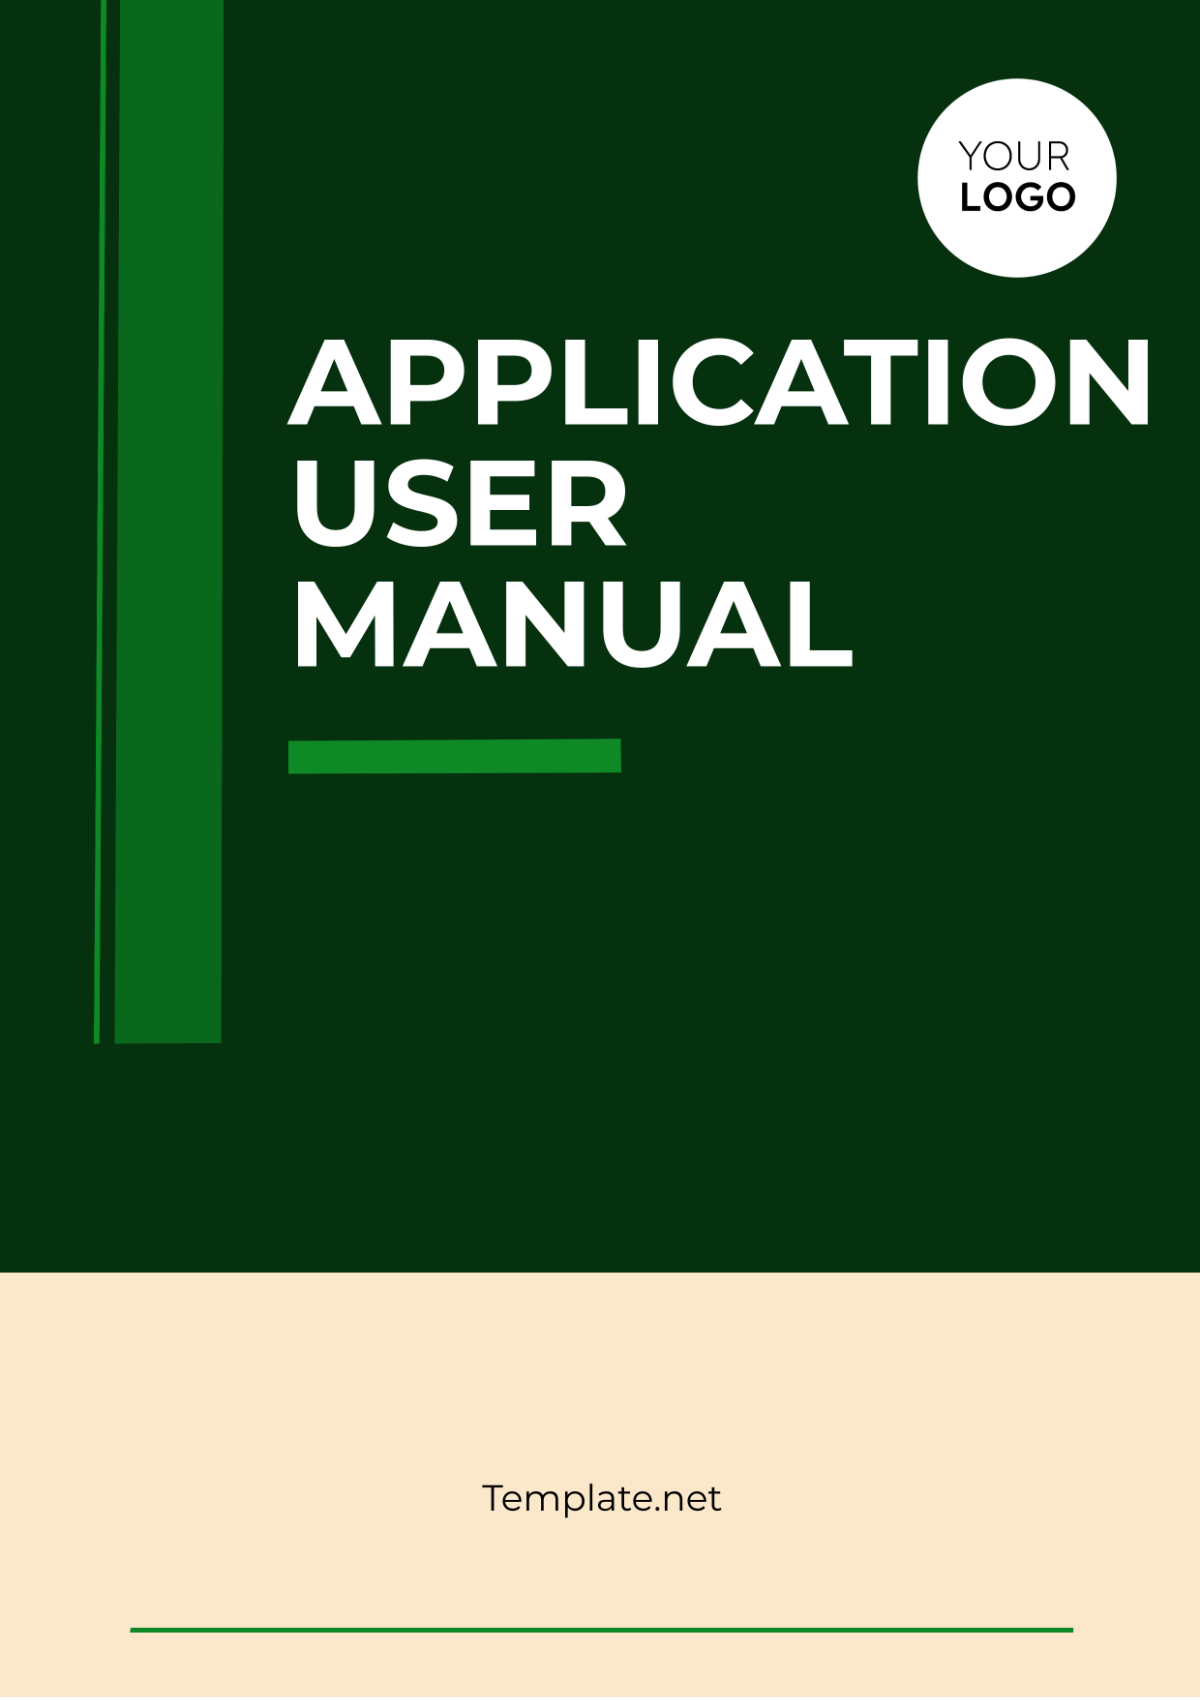 Application User Manual Template